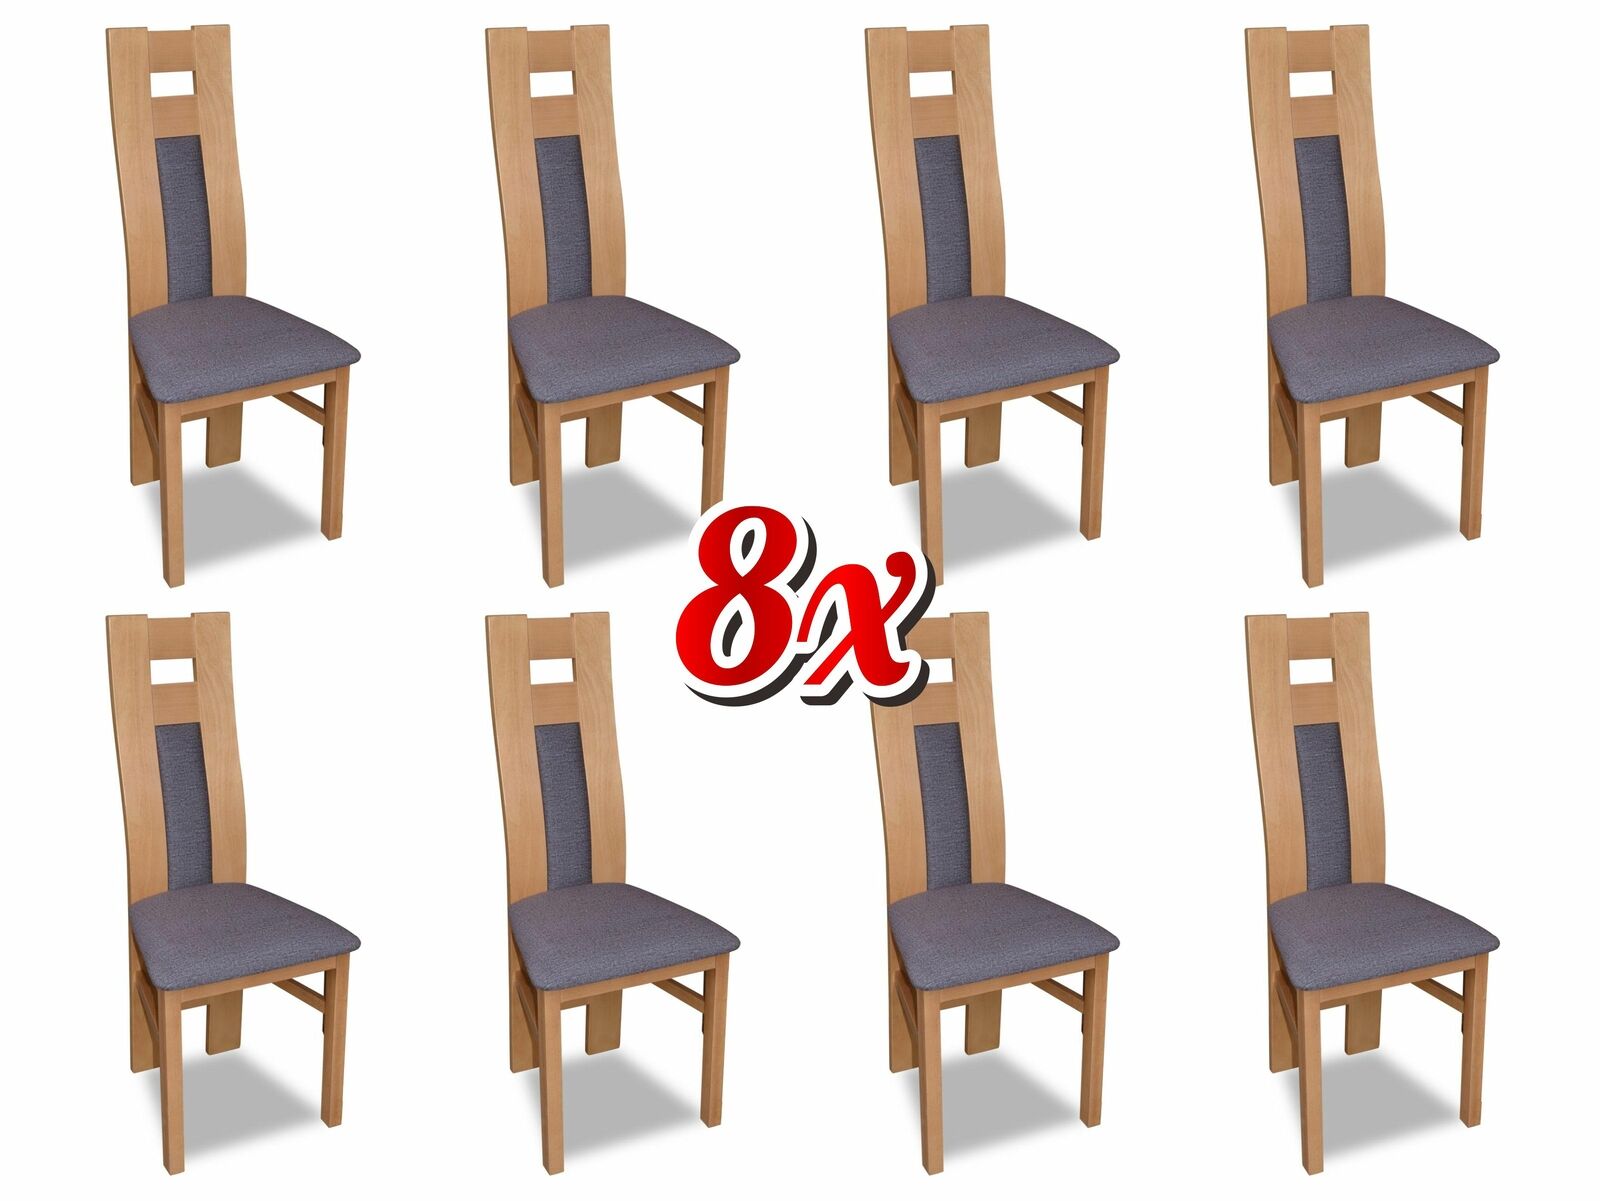 Garnitur Komplett 8x Designer Stuhl Set Esszimmer Lehn Polster Sitz Stühle Stoff